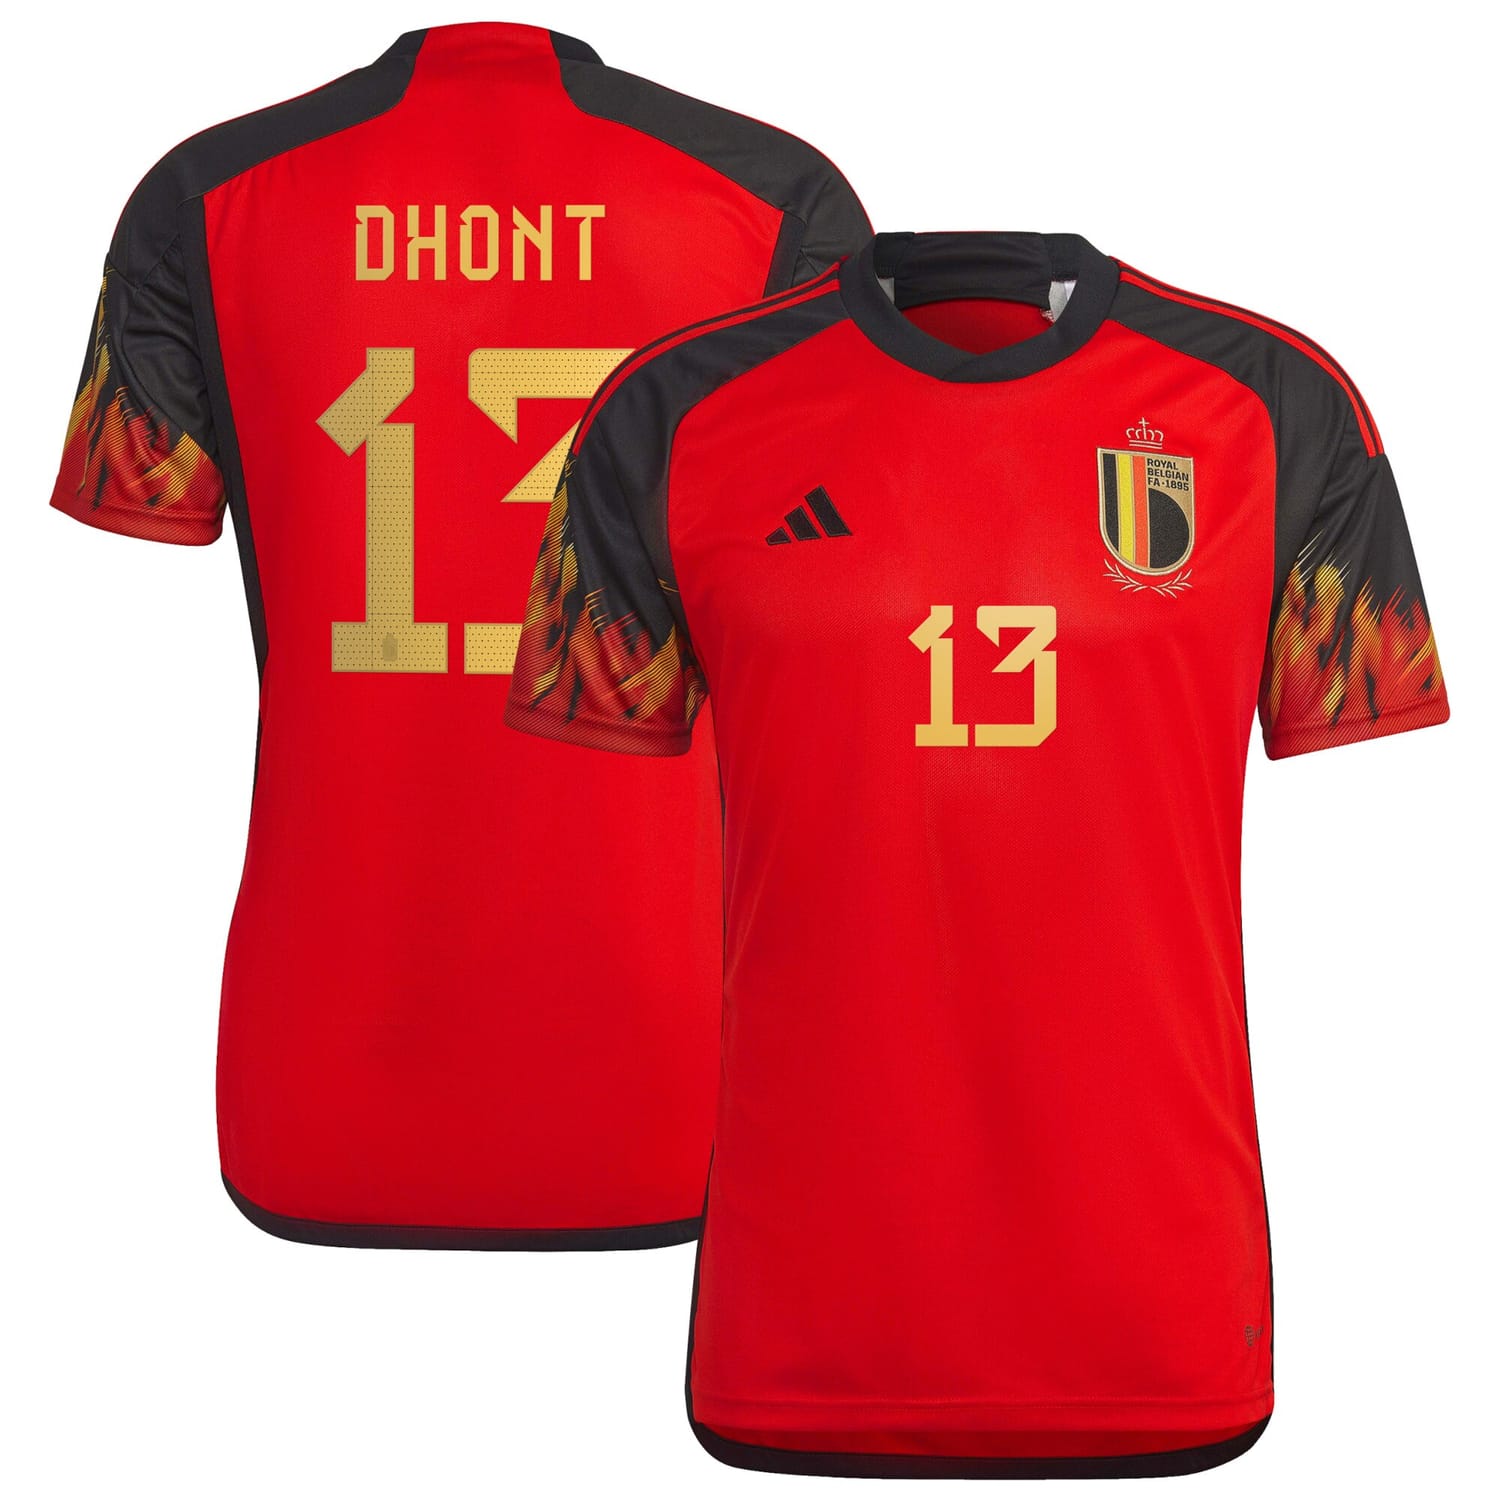 Belgium National Team Home Jersey Shirt 2022 player Elena Dhont 13 printing for Men